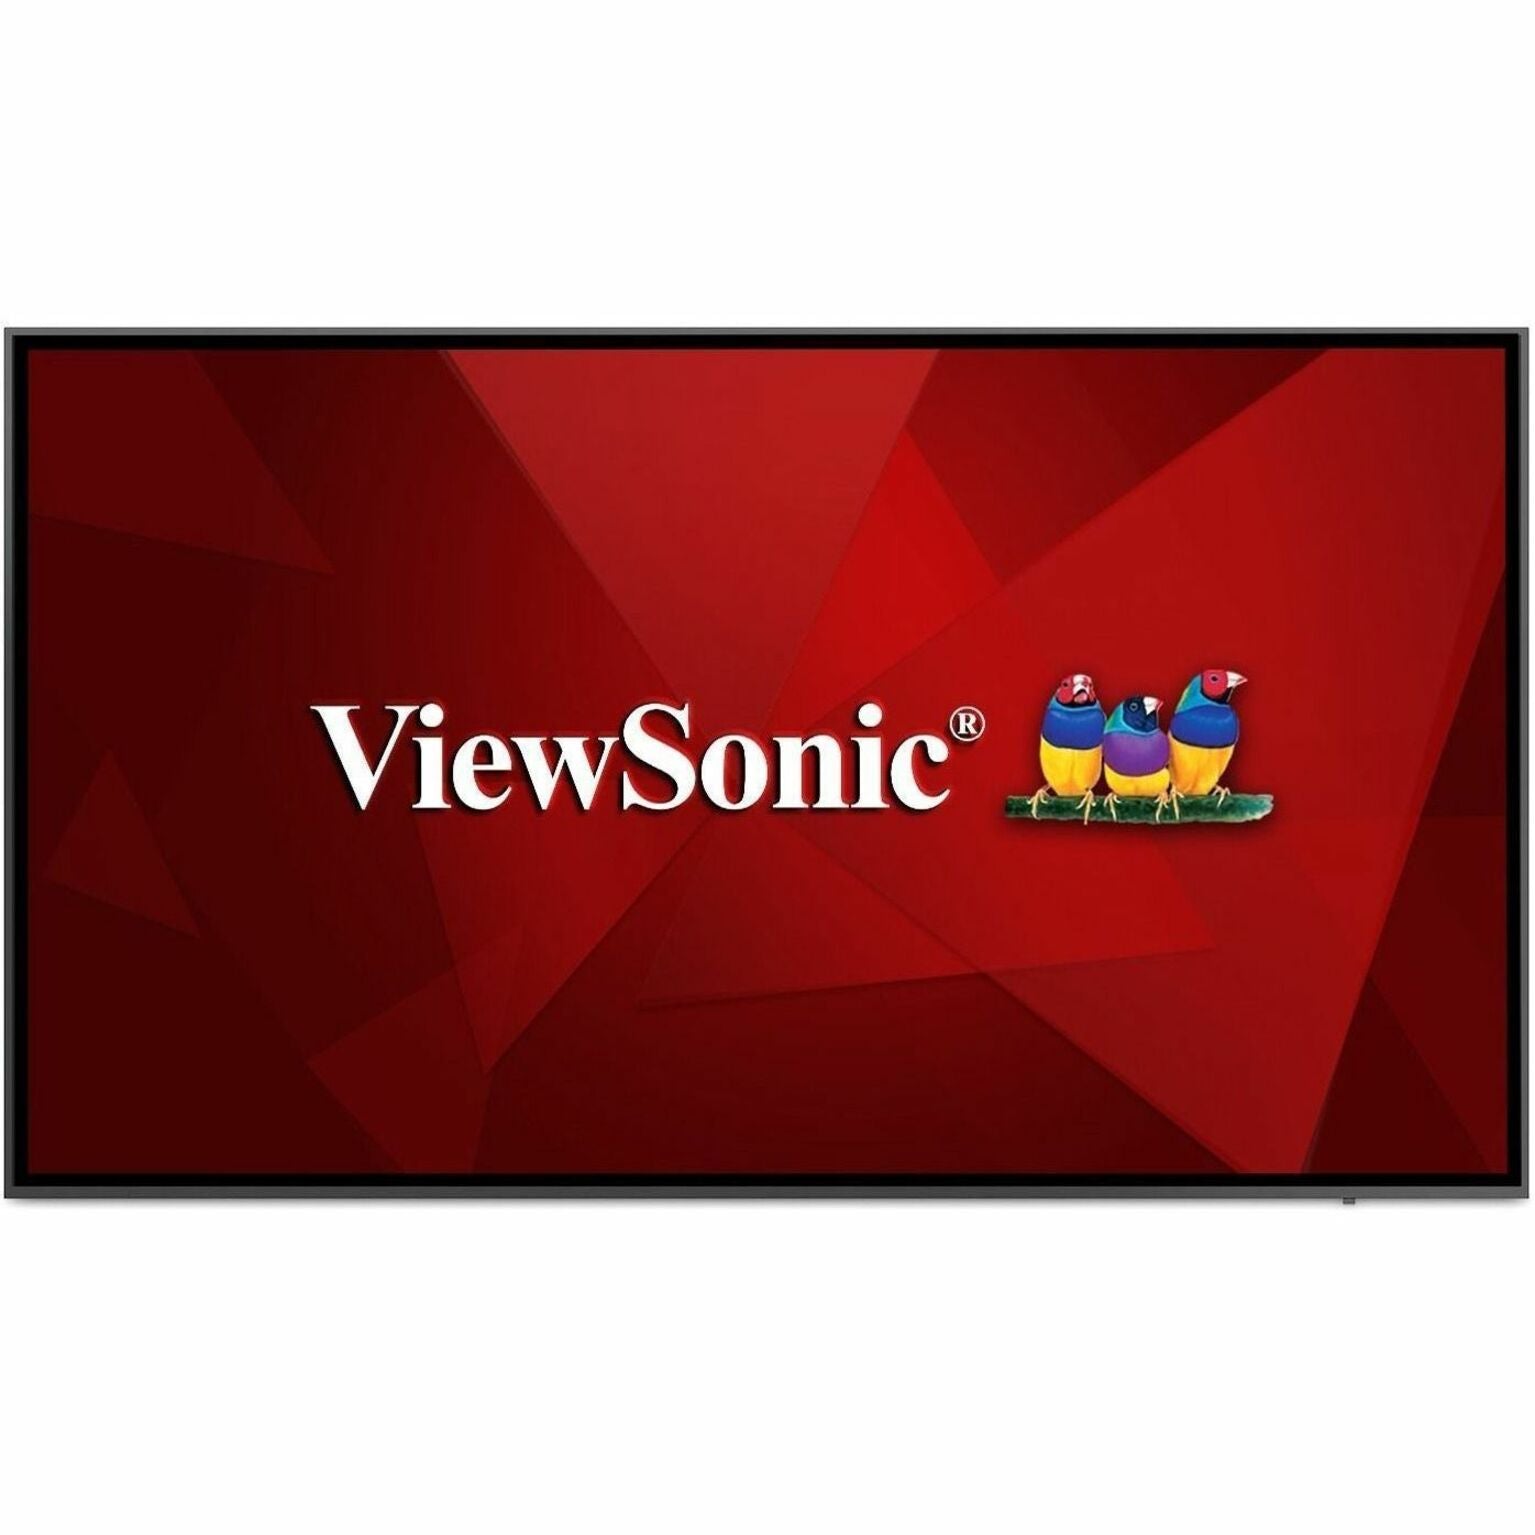 ViewSonic CDE7520-W Digital Signage Display, 75" 4K LCD, 450 Nit Brightness, 3GB Memory, 3 Year Warranty